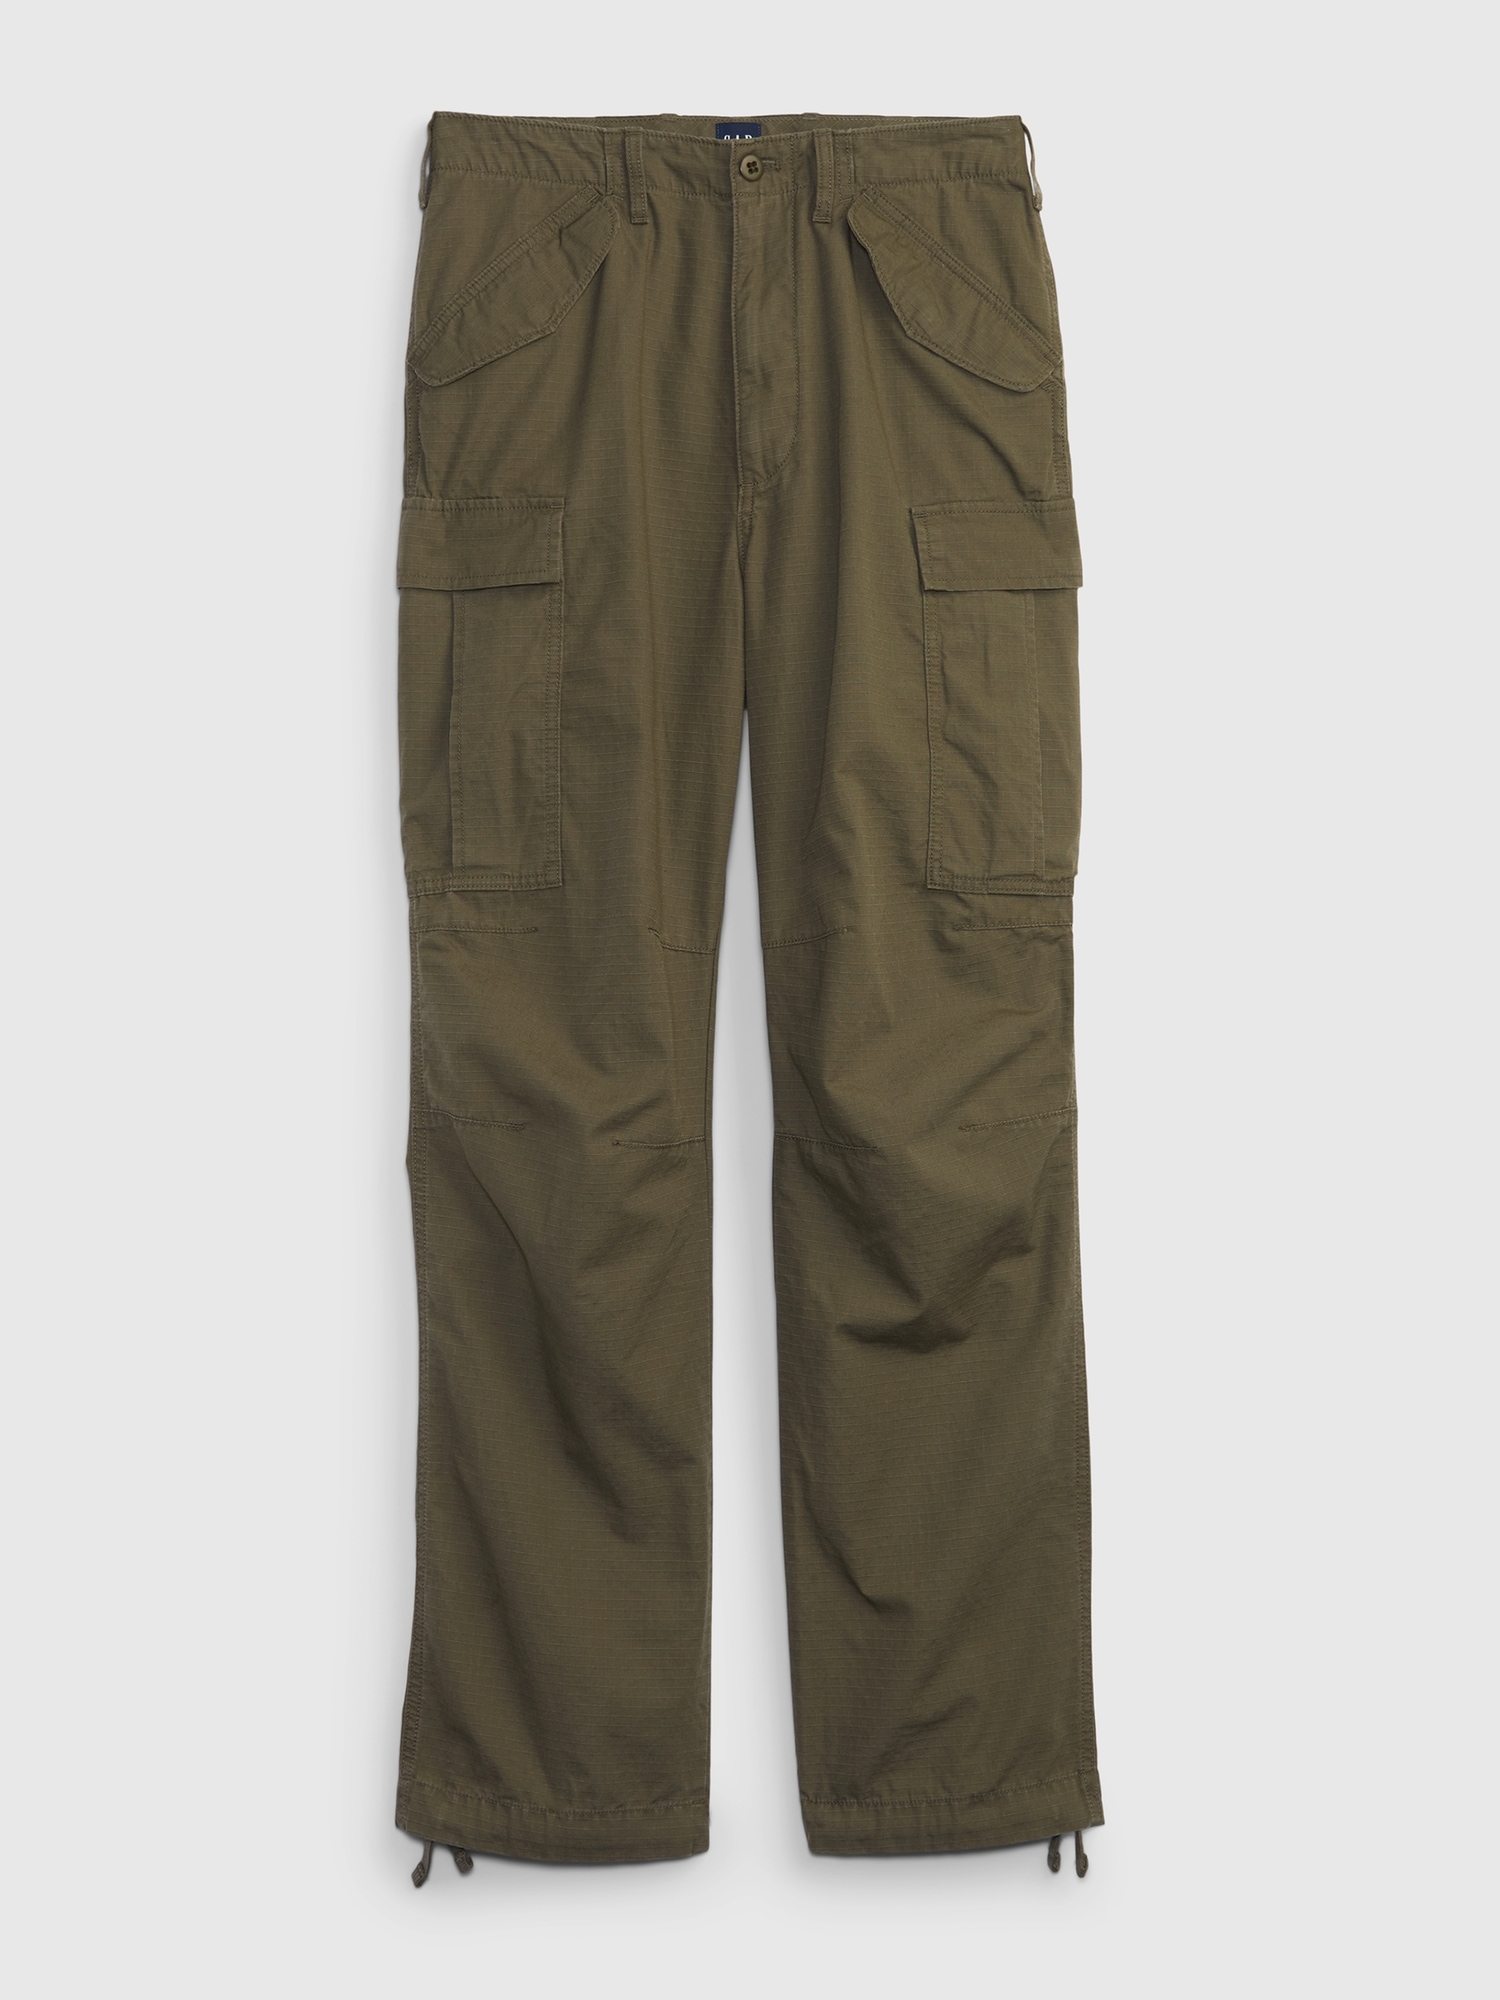 GAP Skinny Fit Cords Cargo Pants with GapFlex Original Colour